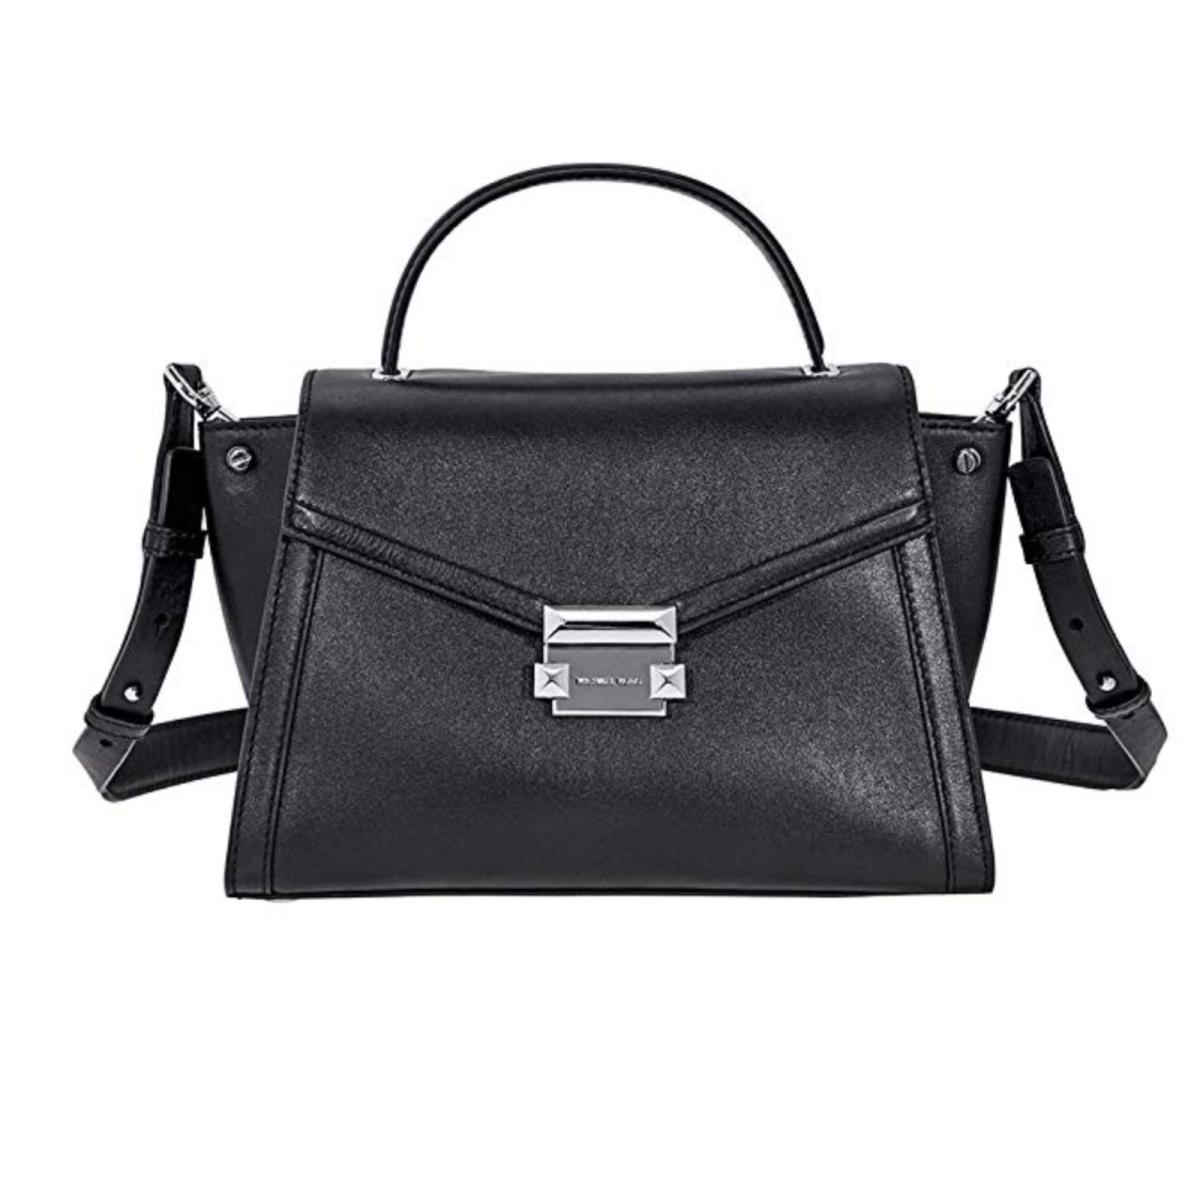 Michael Kors Women`s MK Whitney LG TH Satchel Flap Bag Black Leather 30T8SXIS3T - Black Lining, Black / Silver Exterior